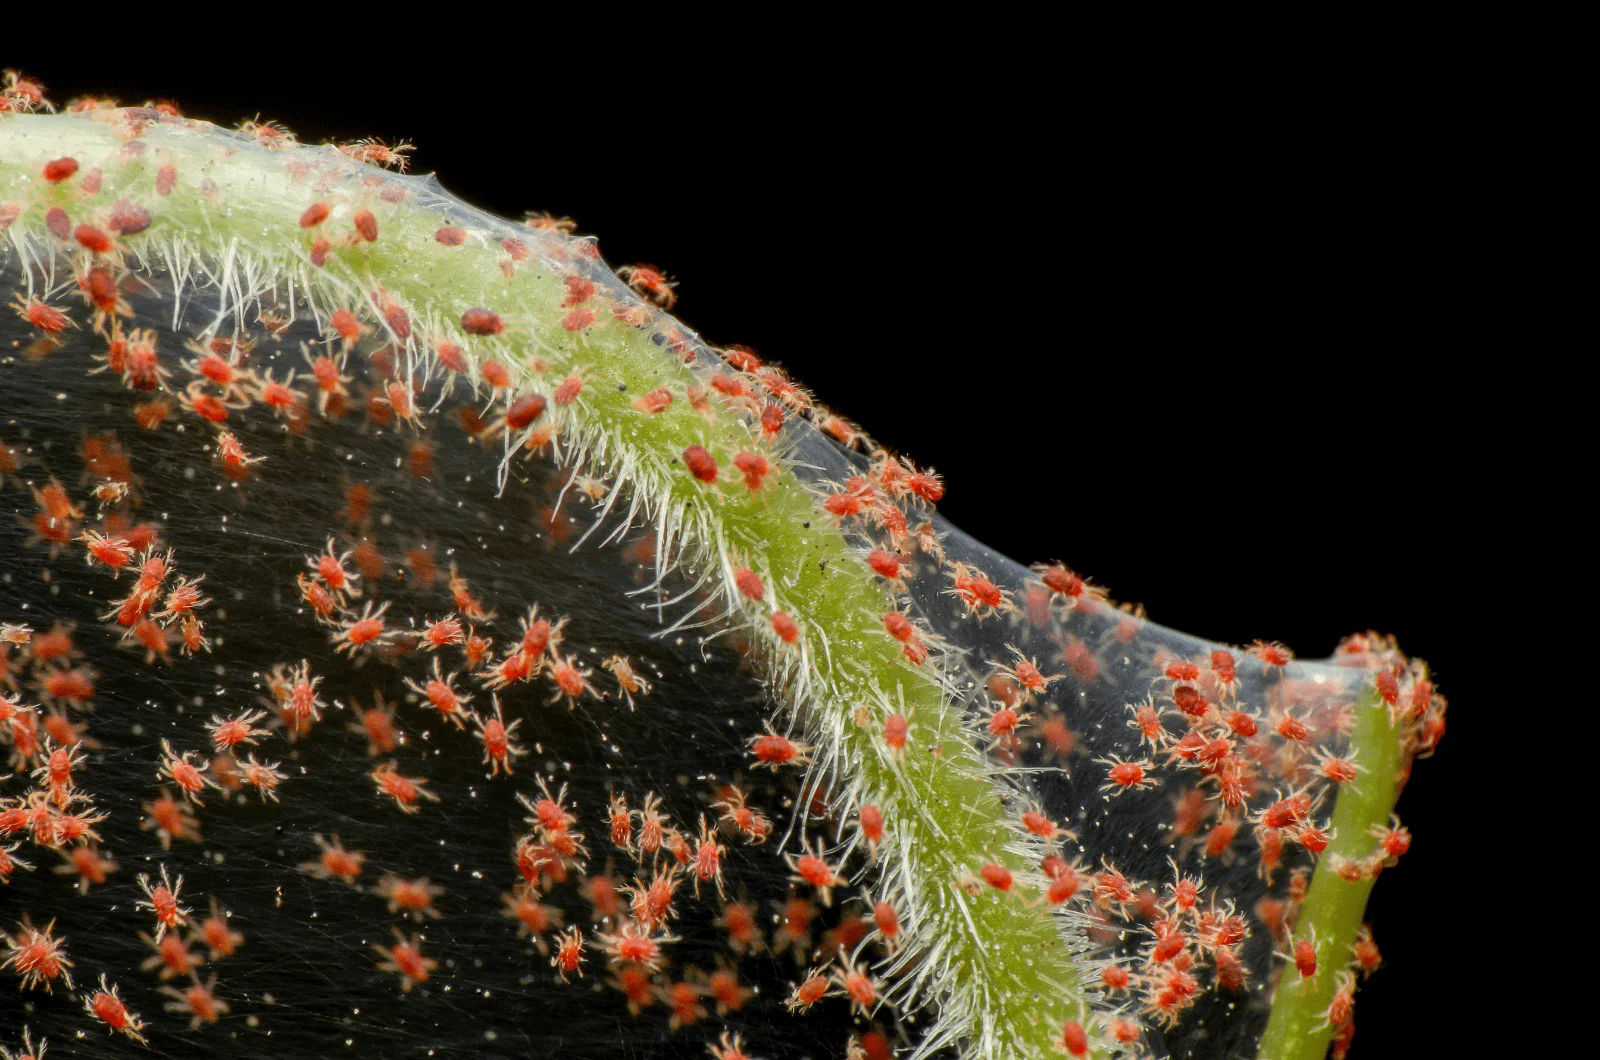 Spider Mites on green plant